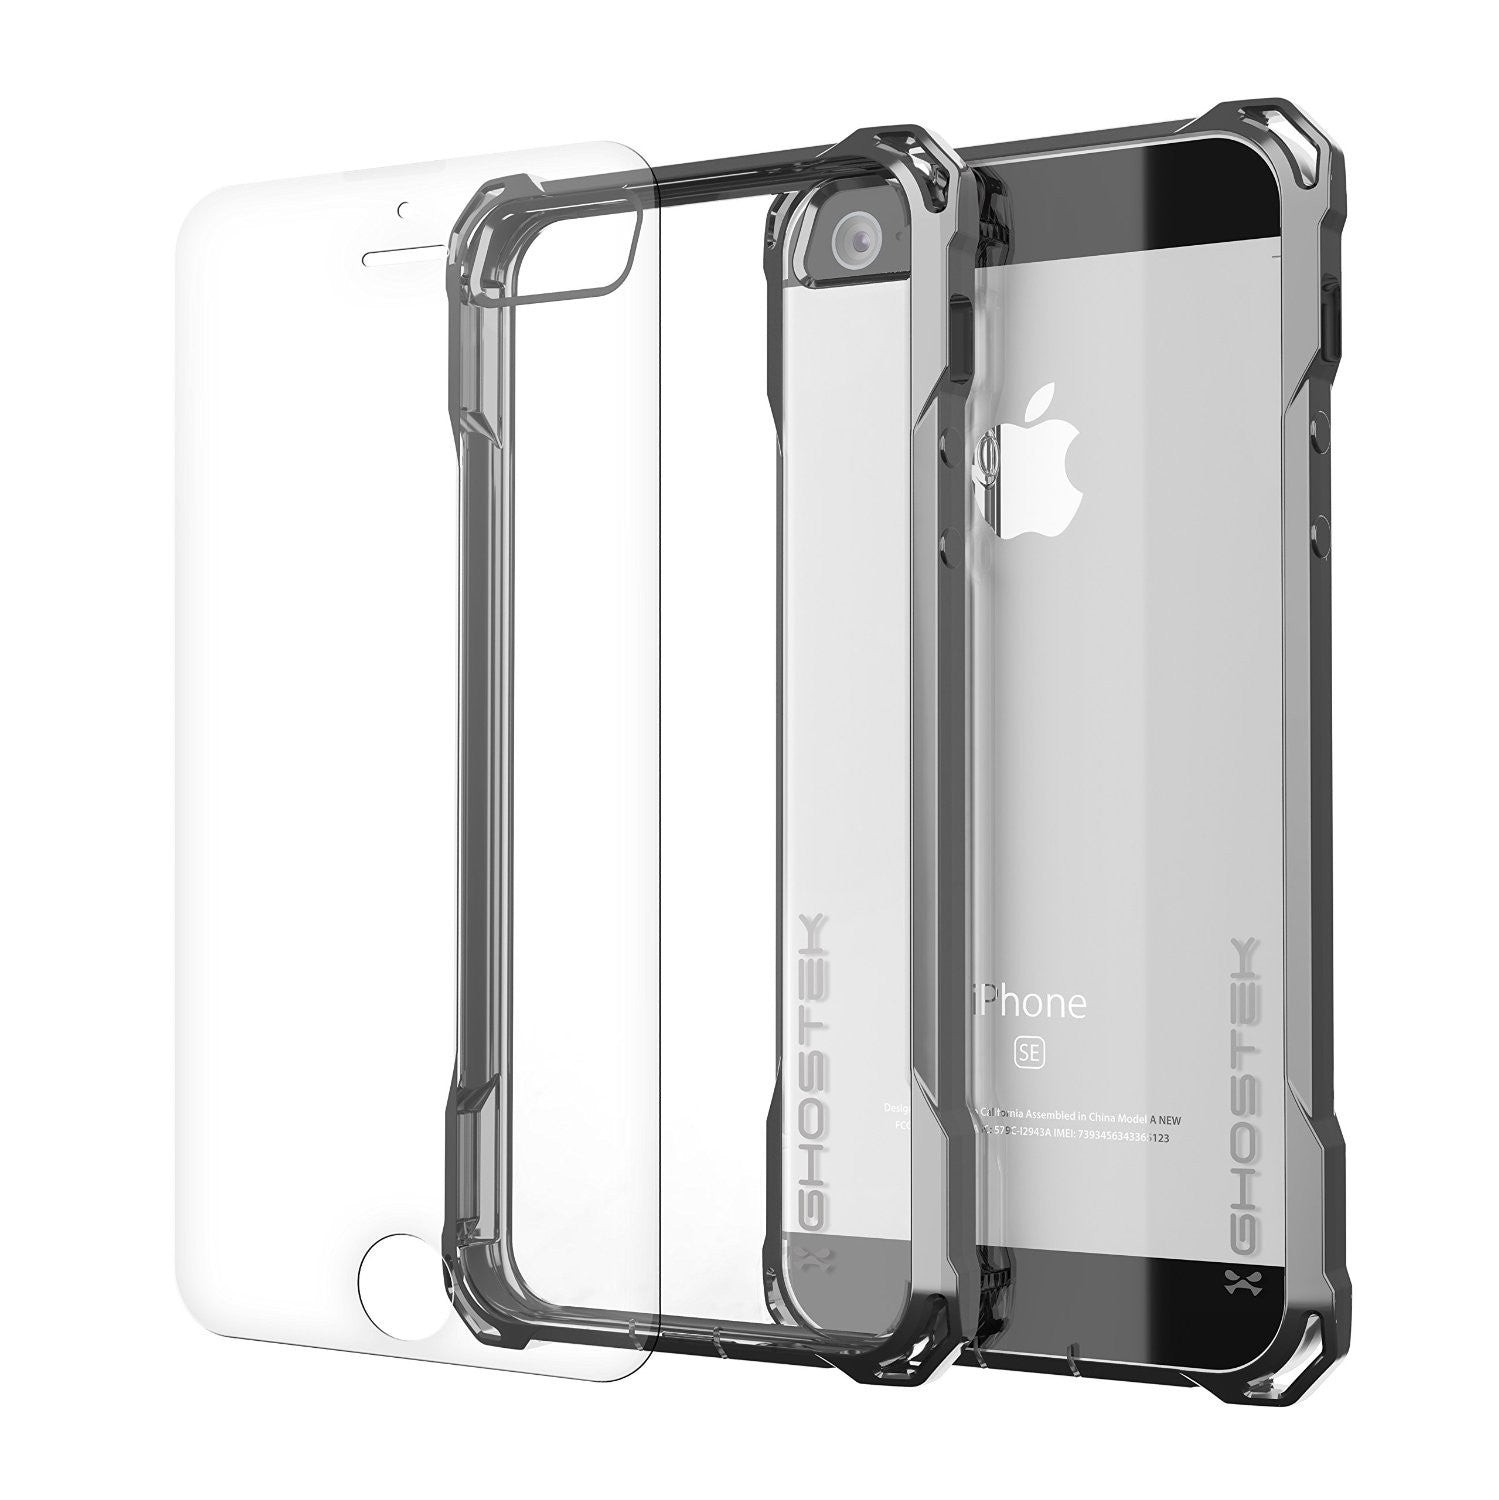 iPhone SE Case, Ghostek® Covert Space Grey, Premium Impact Protective | Lifetime Warranty Exchange (Color in image: space grey)